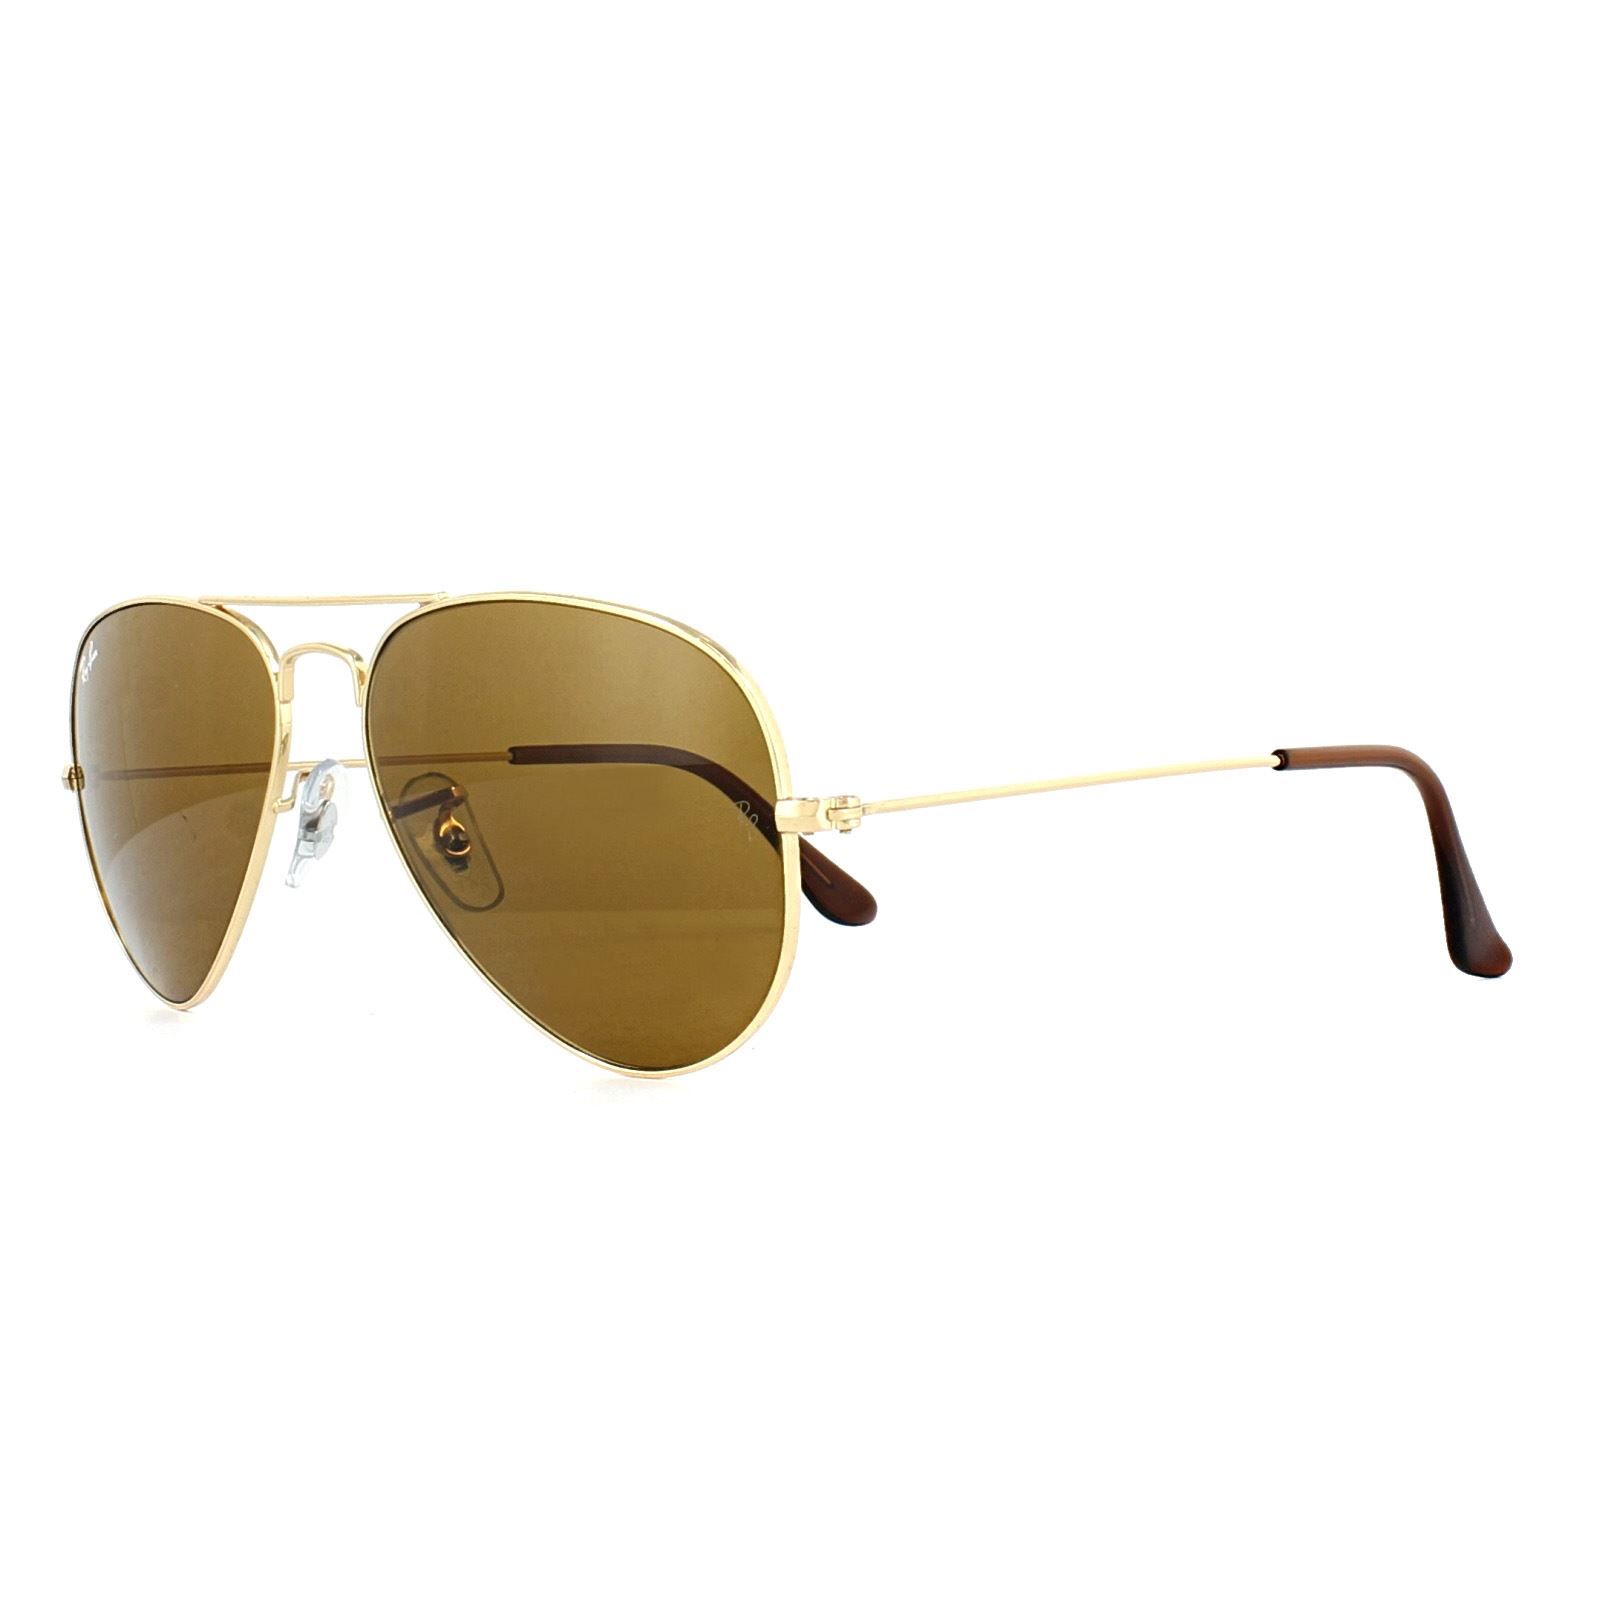 Ray-Ban Sunglasses Aviator 3025 Gold Brown 001/33 55mm